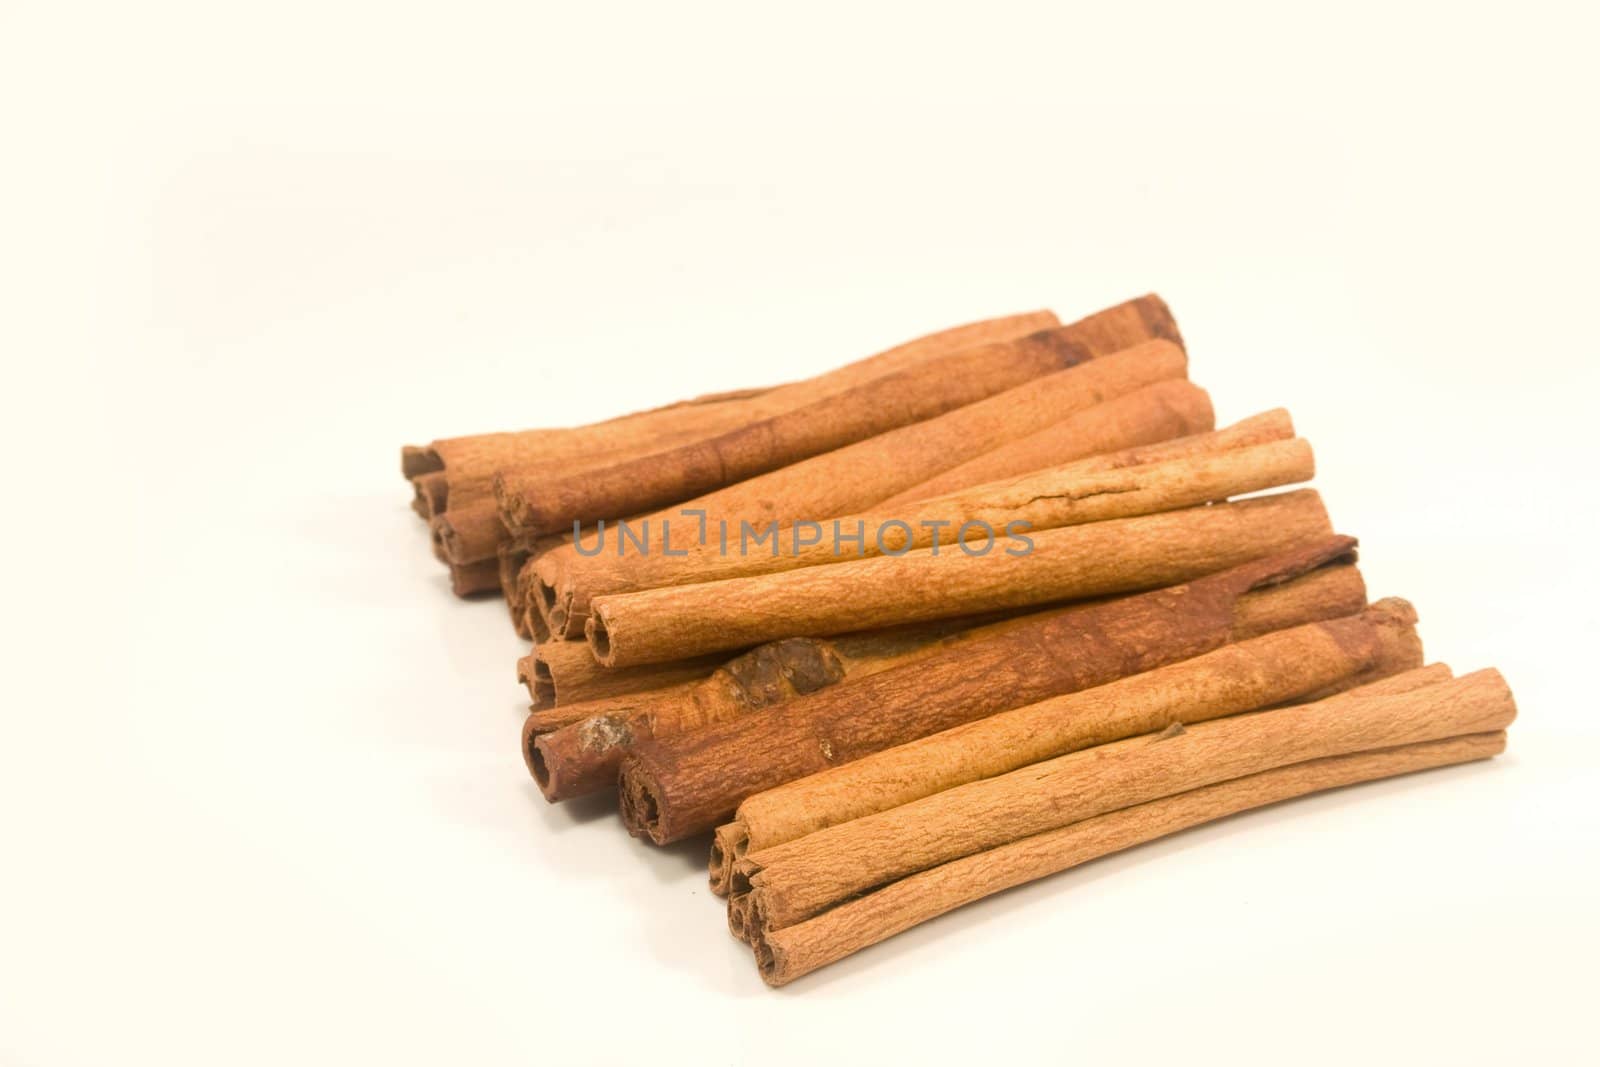 Cinnamon sticks isolated on white